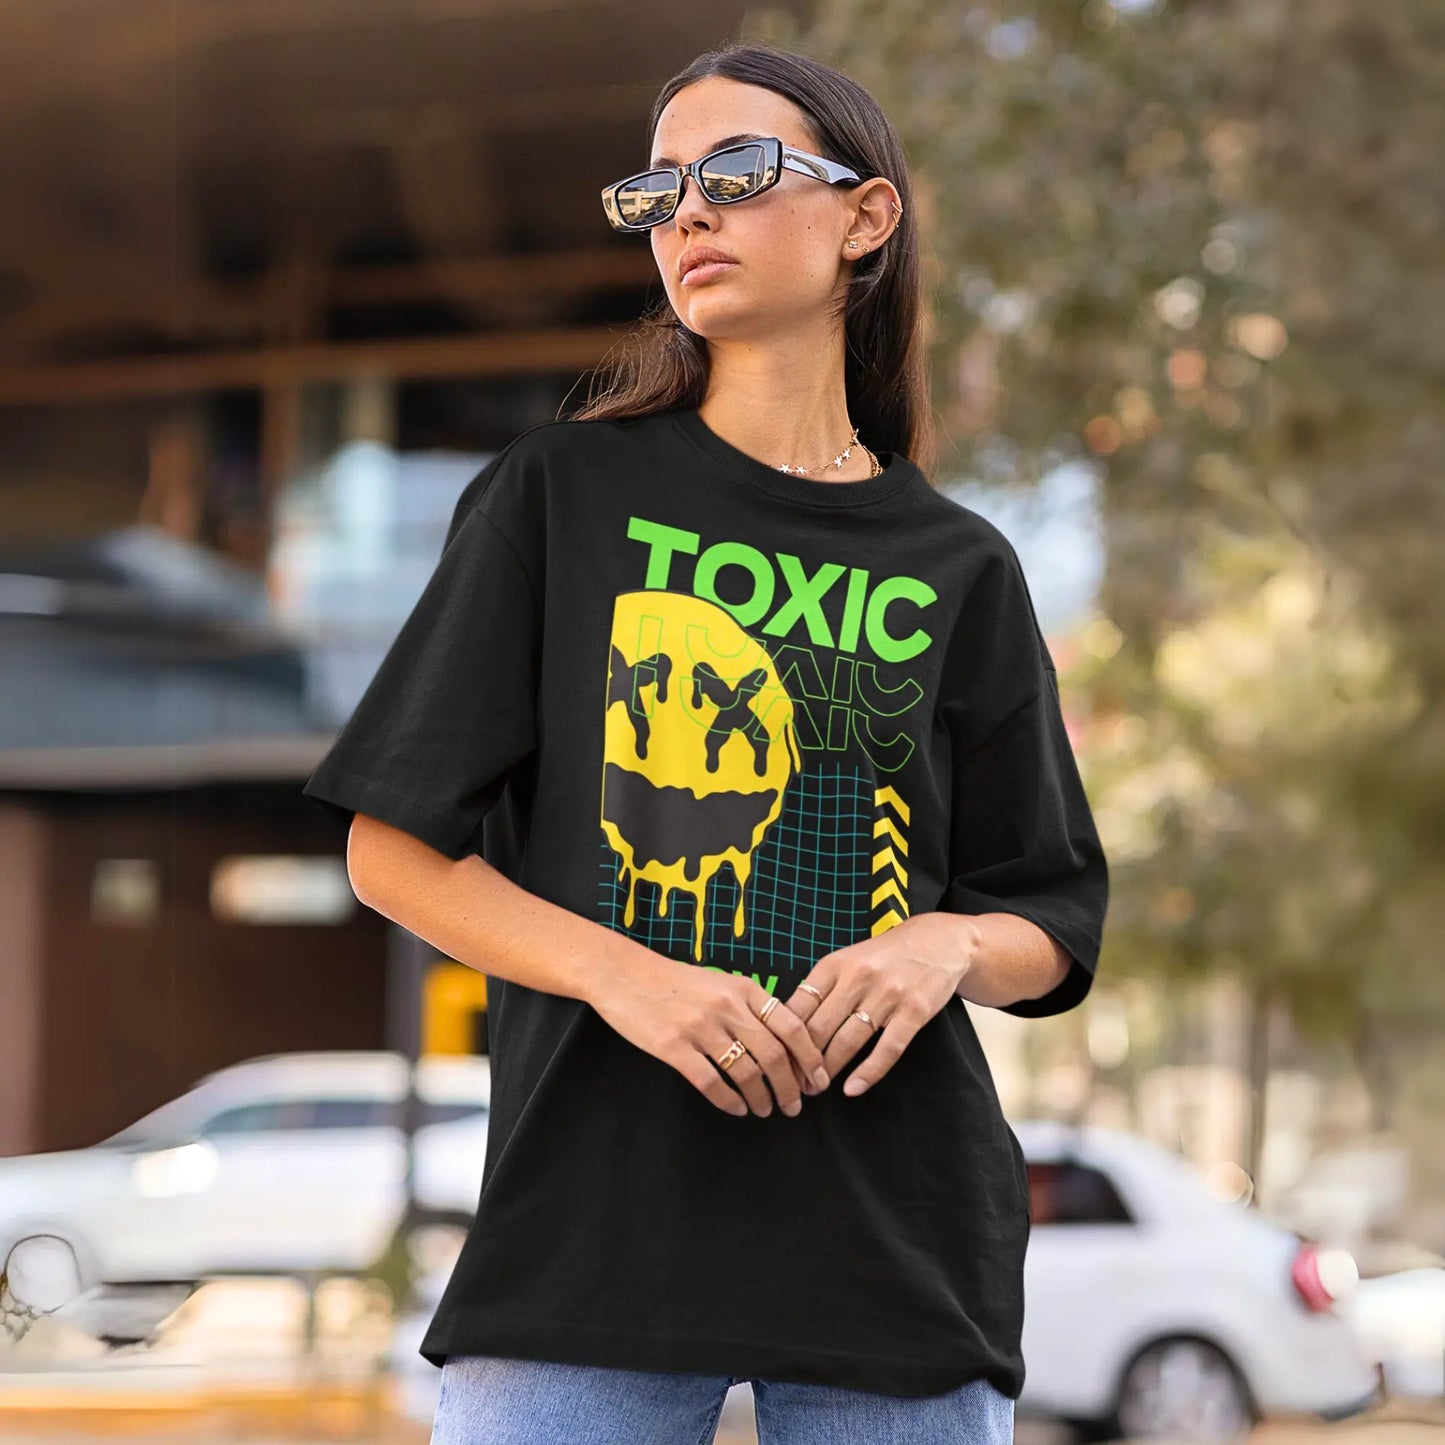 Toxic Urban Graphic Tee - Bold Streetwear Style T-shirt